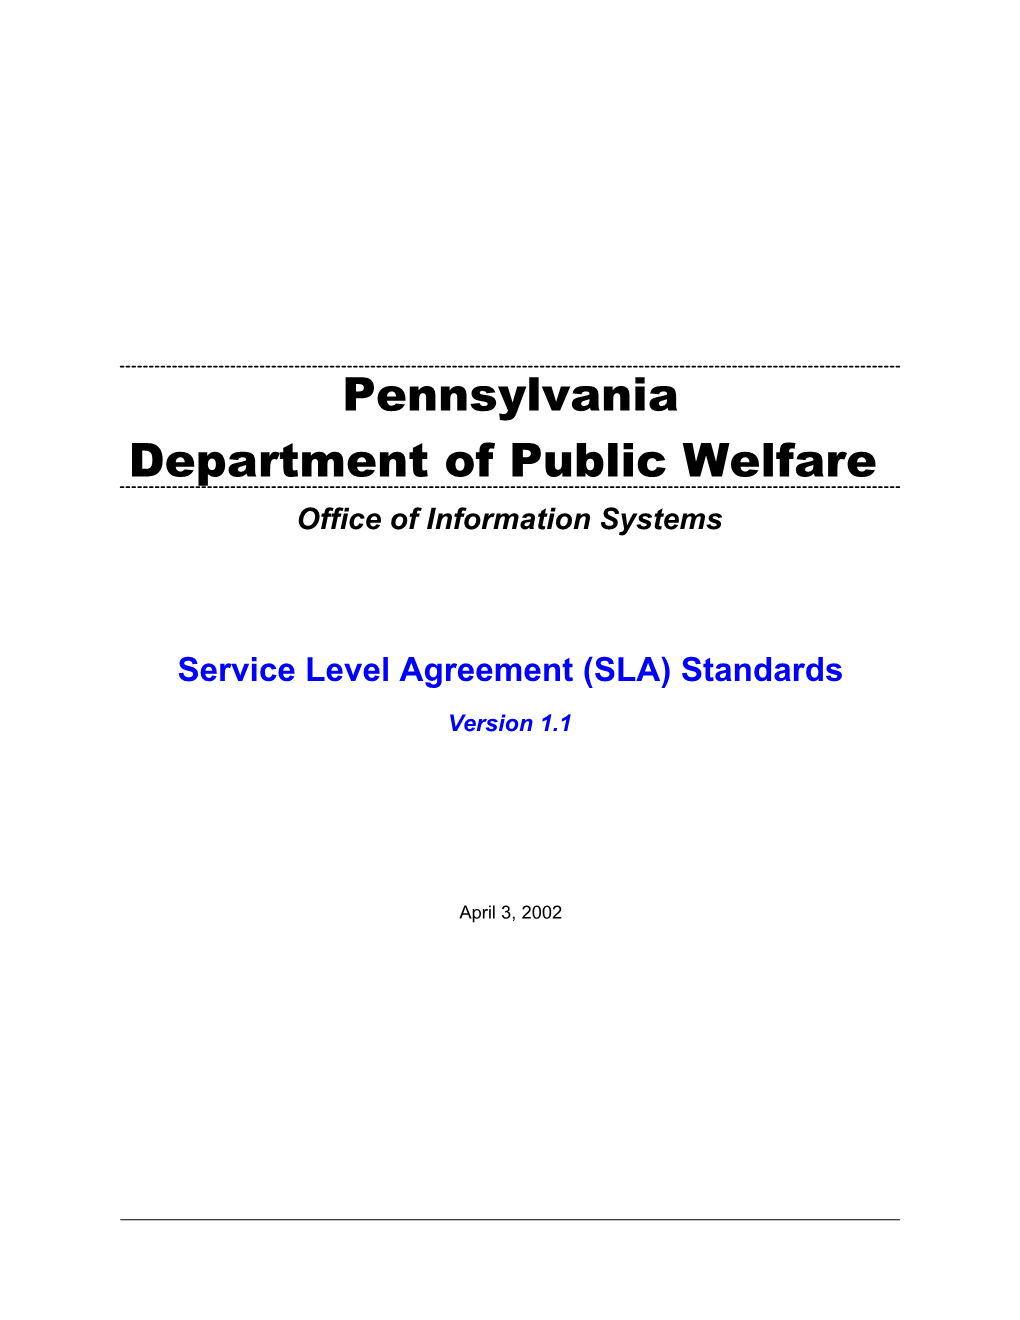 Service Level Agreement (SLA) Standards